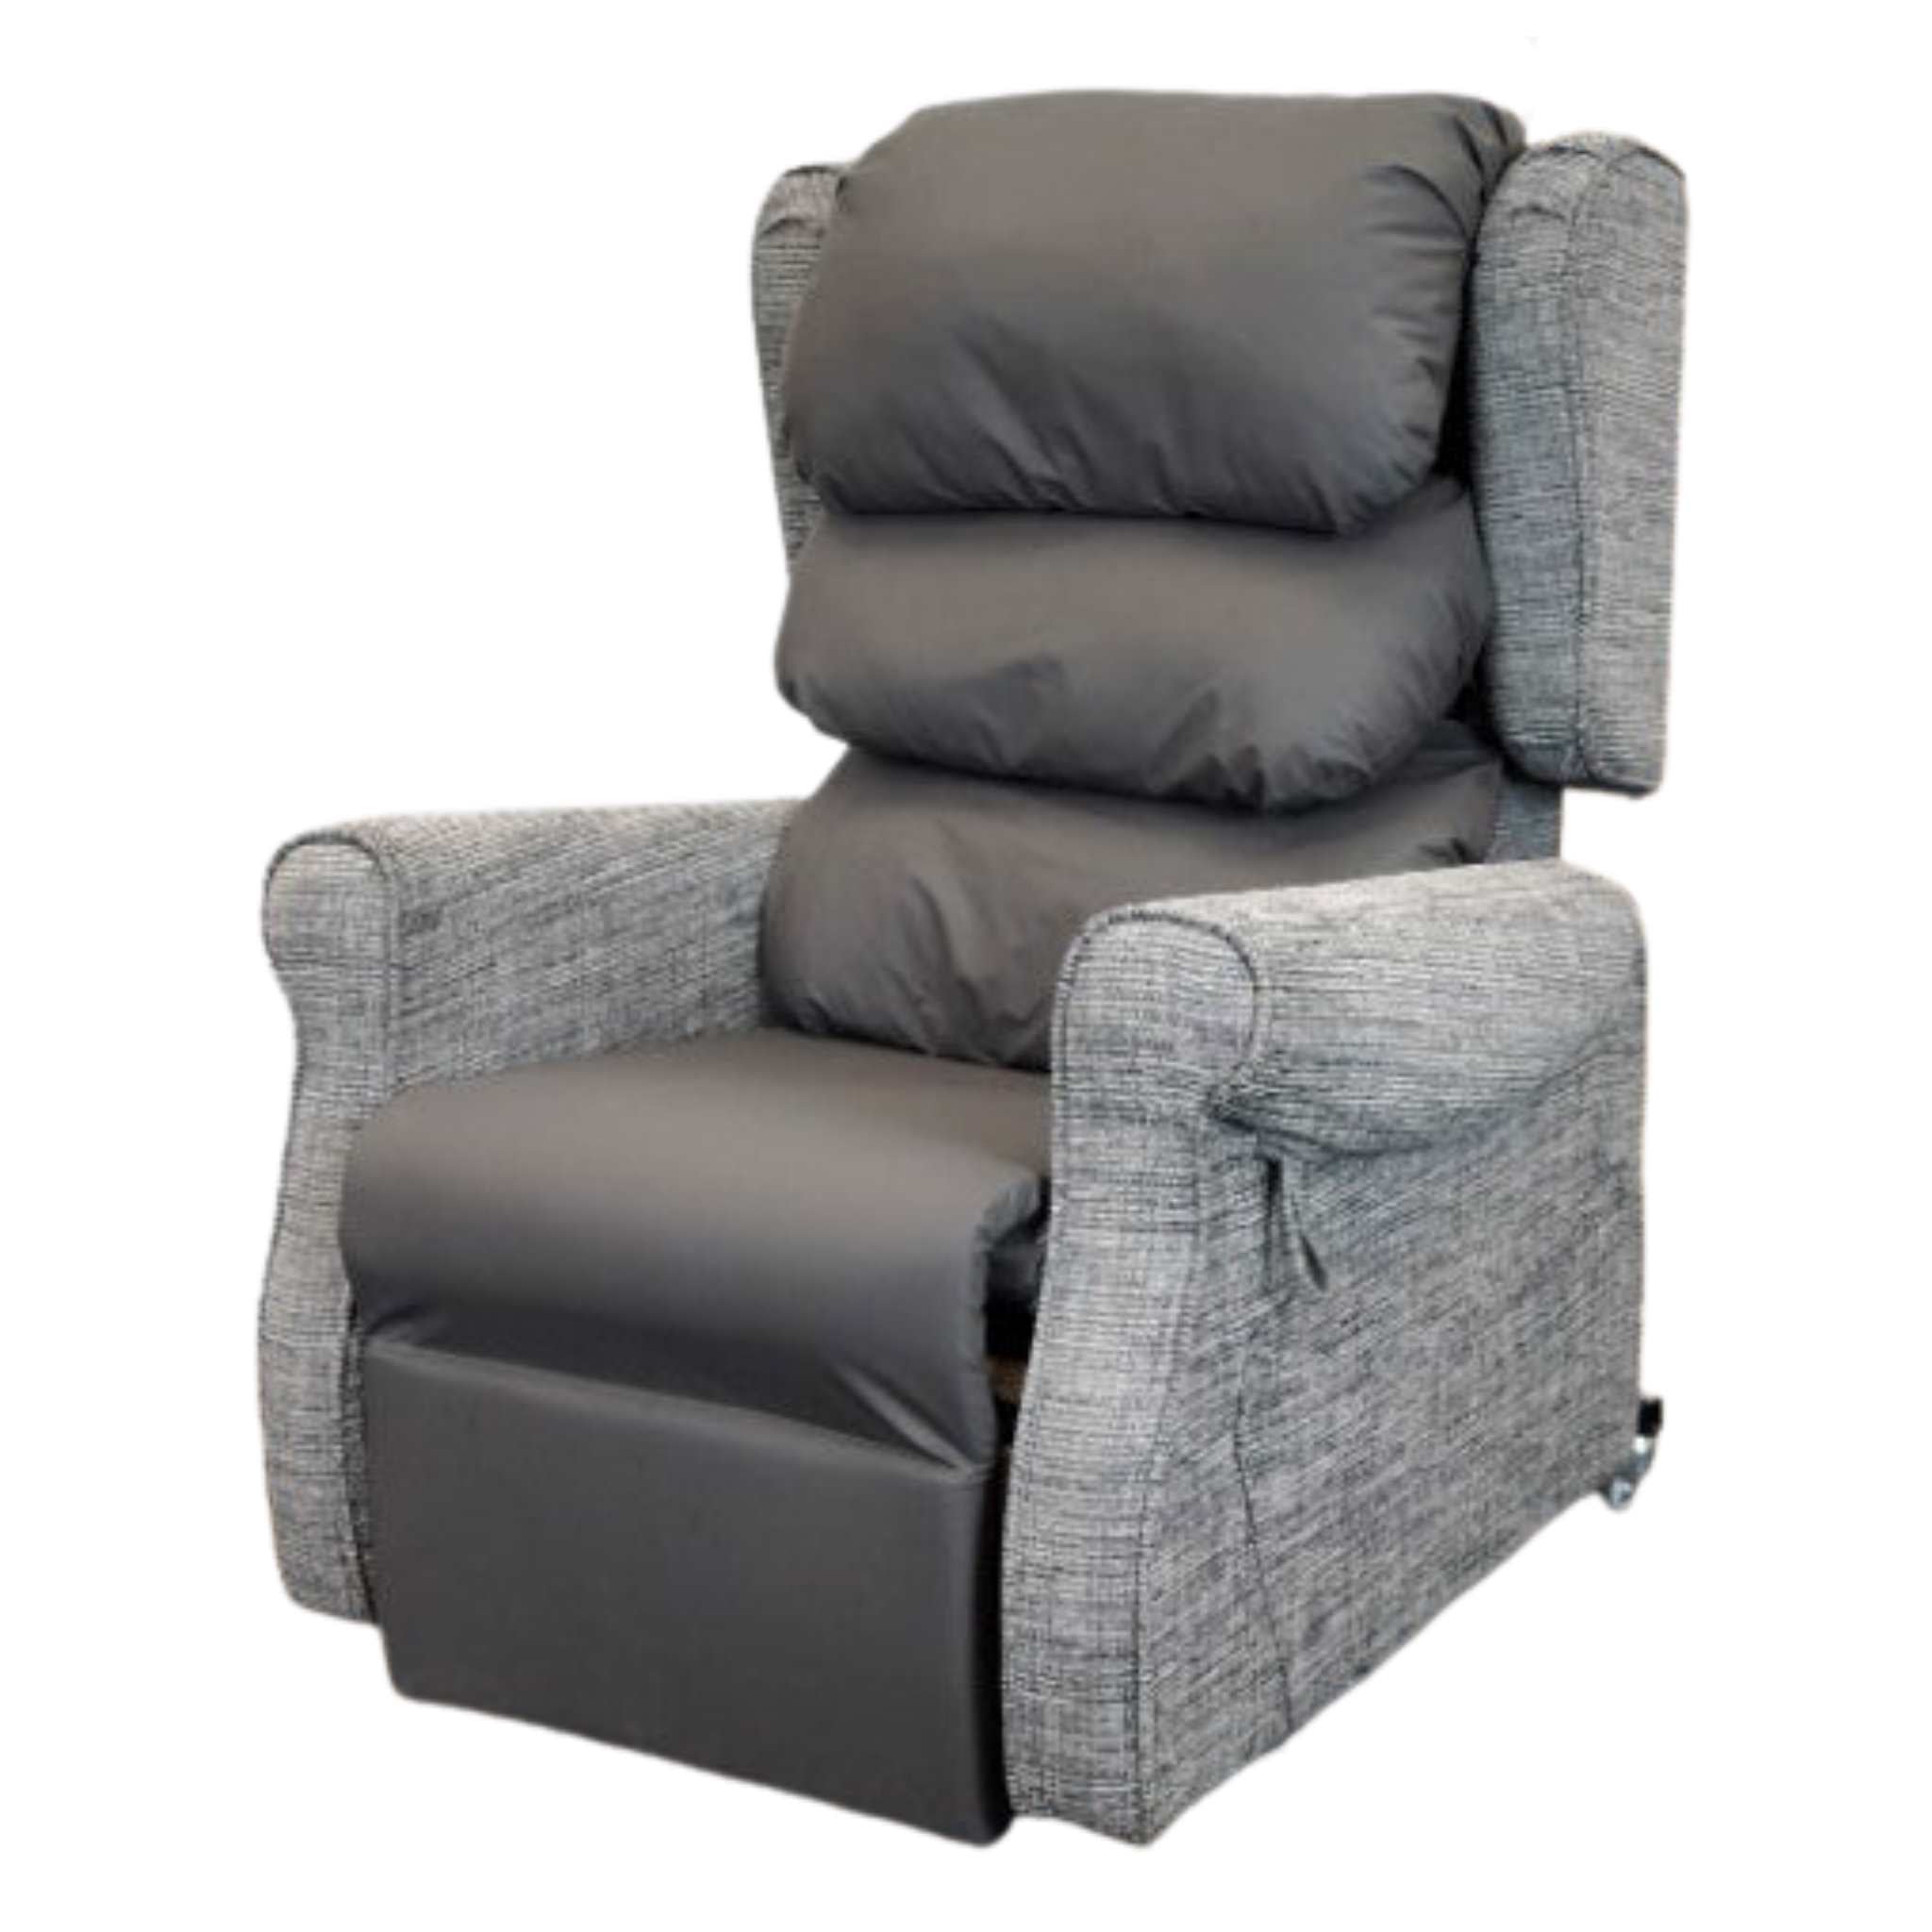 Configura Comfort Chair - Anniversary edition (grey/black)